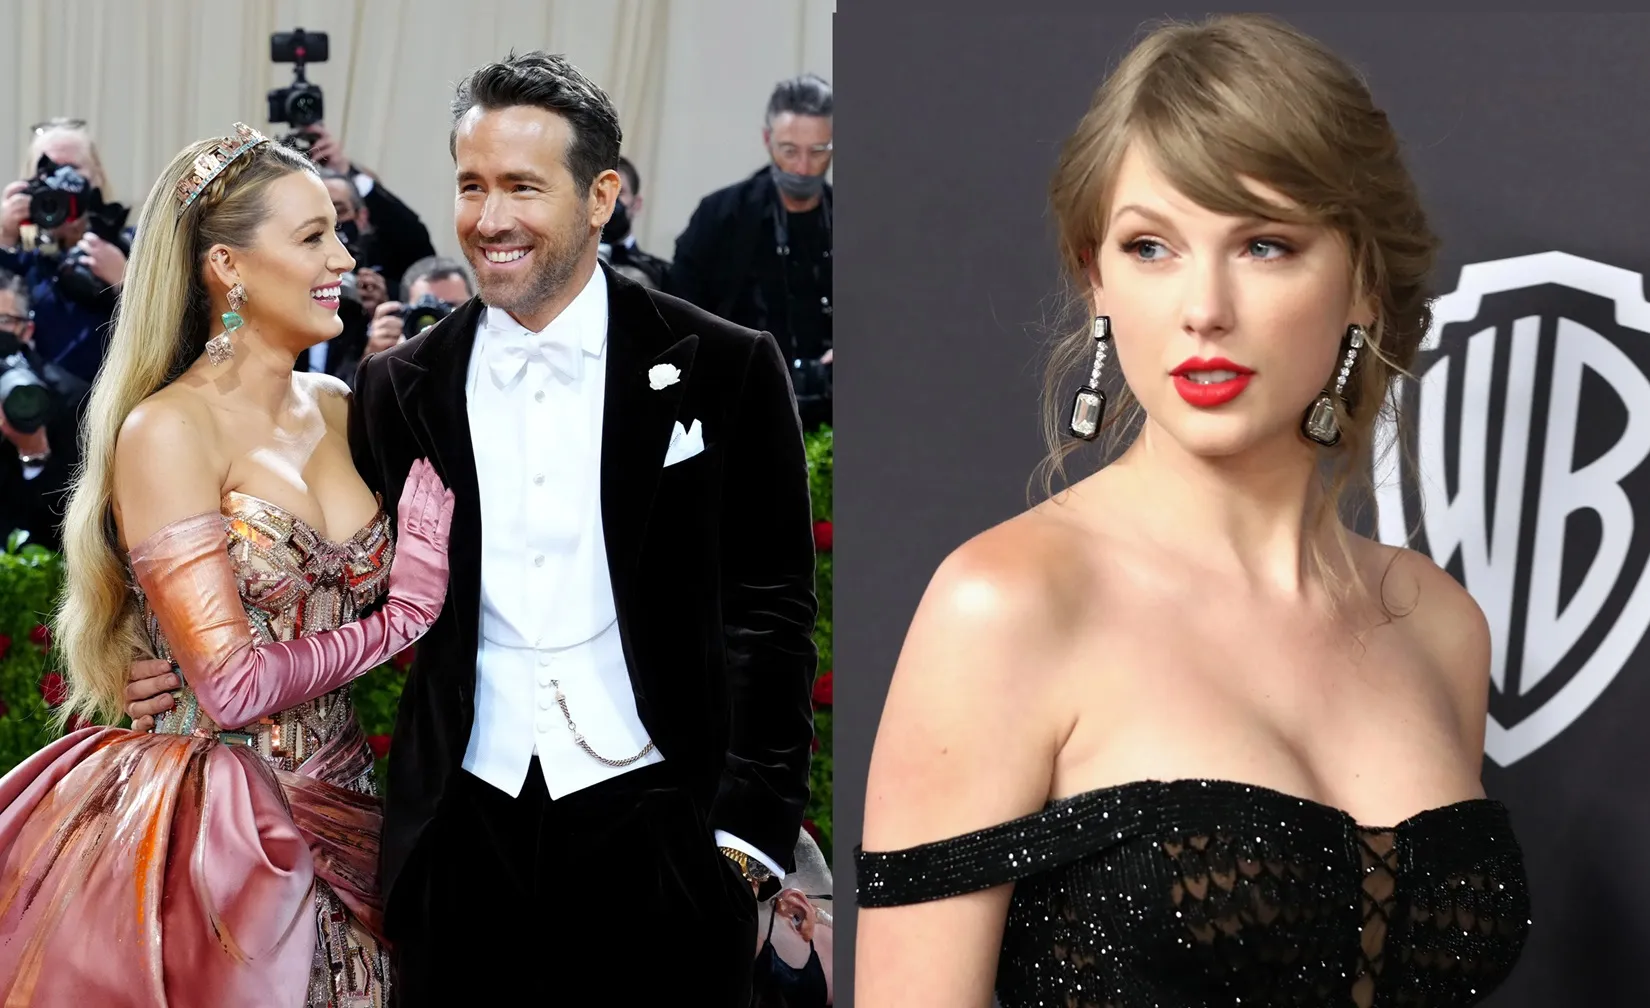 Ryan Reynolds jokes about Blake Lively and Taylor Swift photo - Gossibox.com